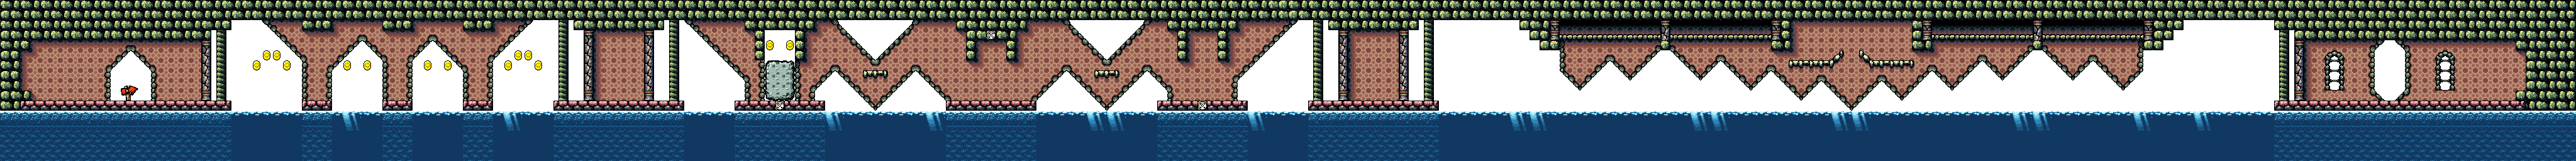 Super Mario World 2: Yoshi's Island - 3-4: Prince Froggy's Fort (2/6)